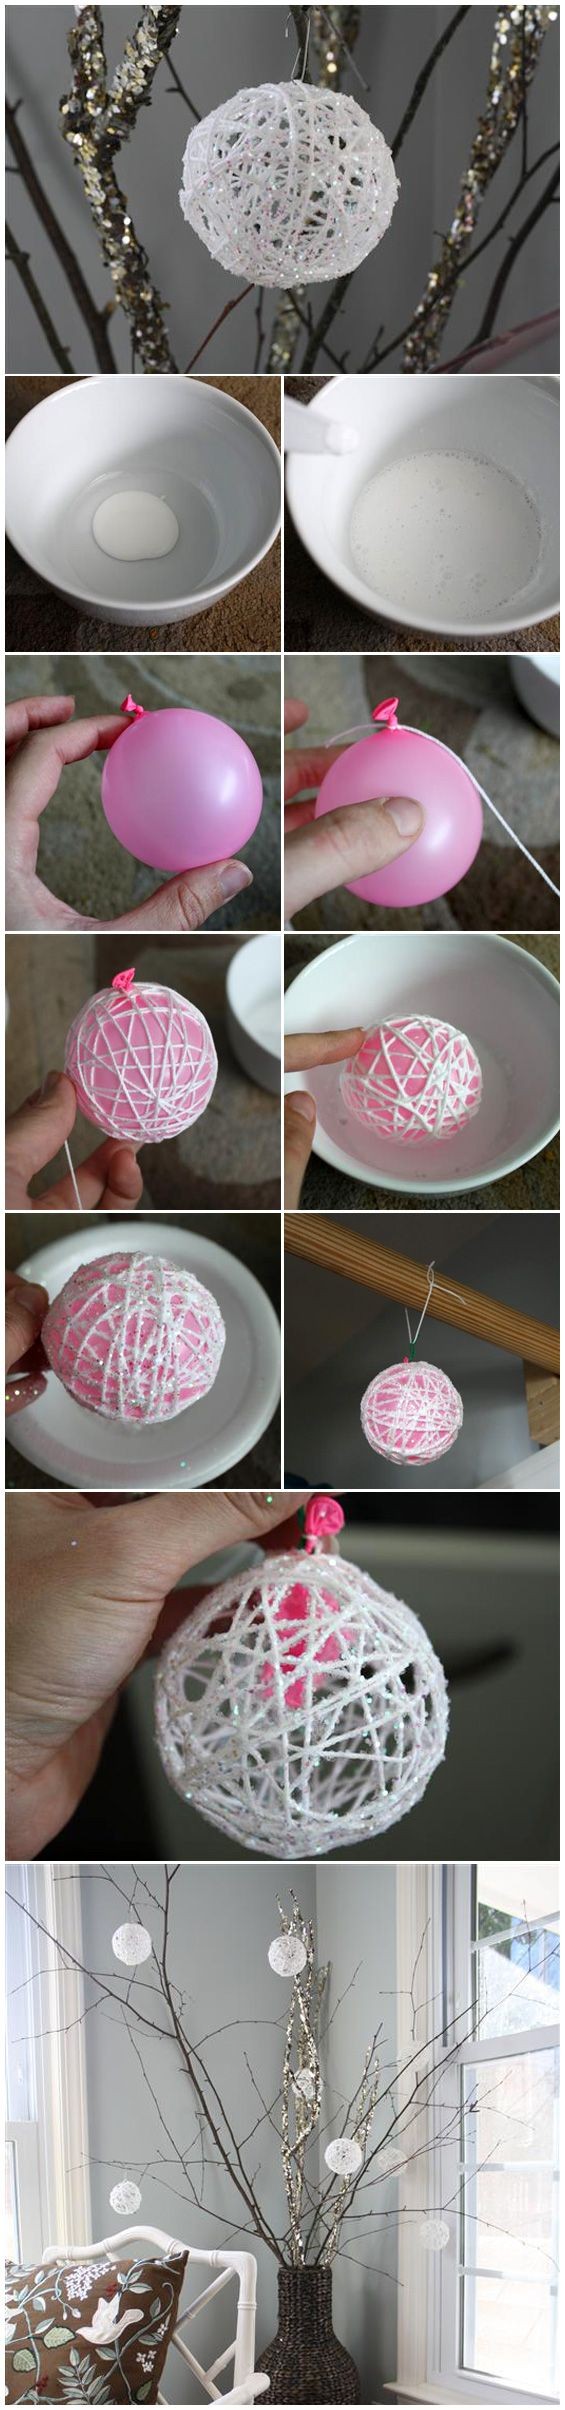 DIY ~~ making string ornaments. très chouette...